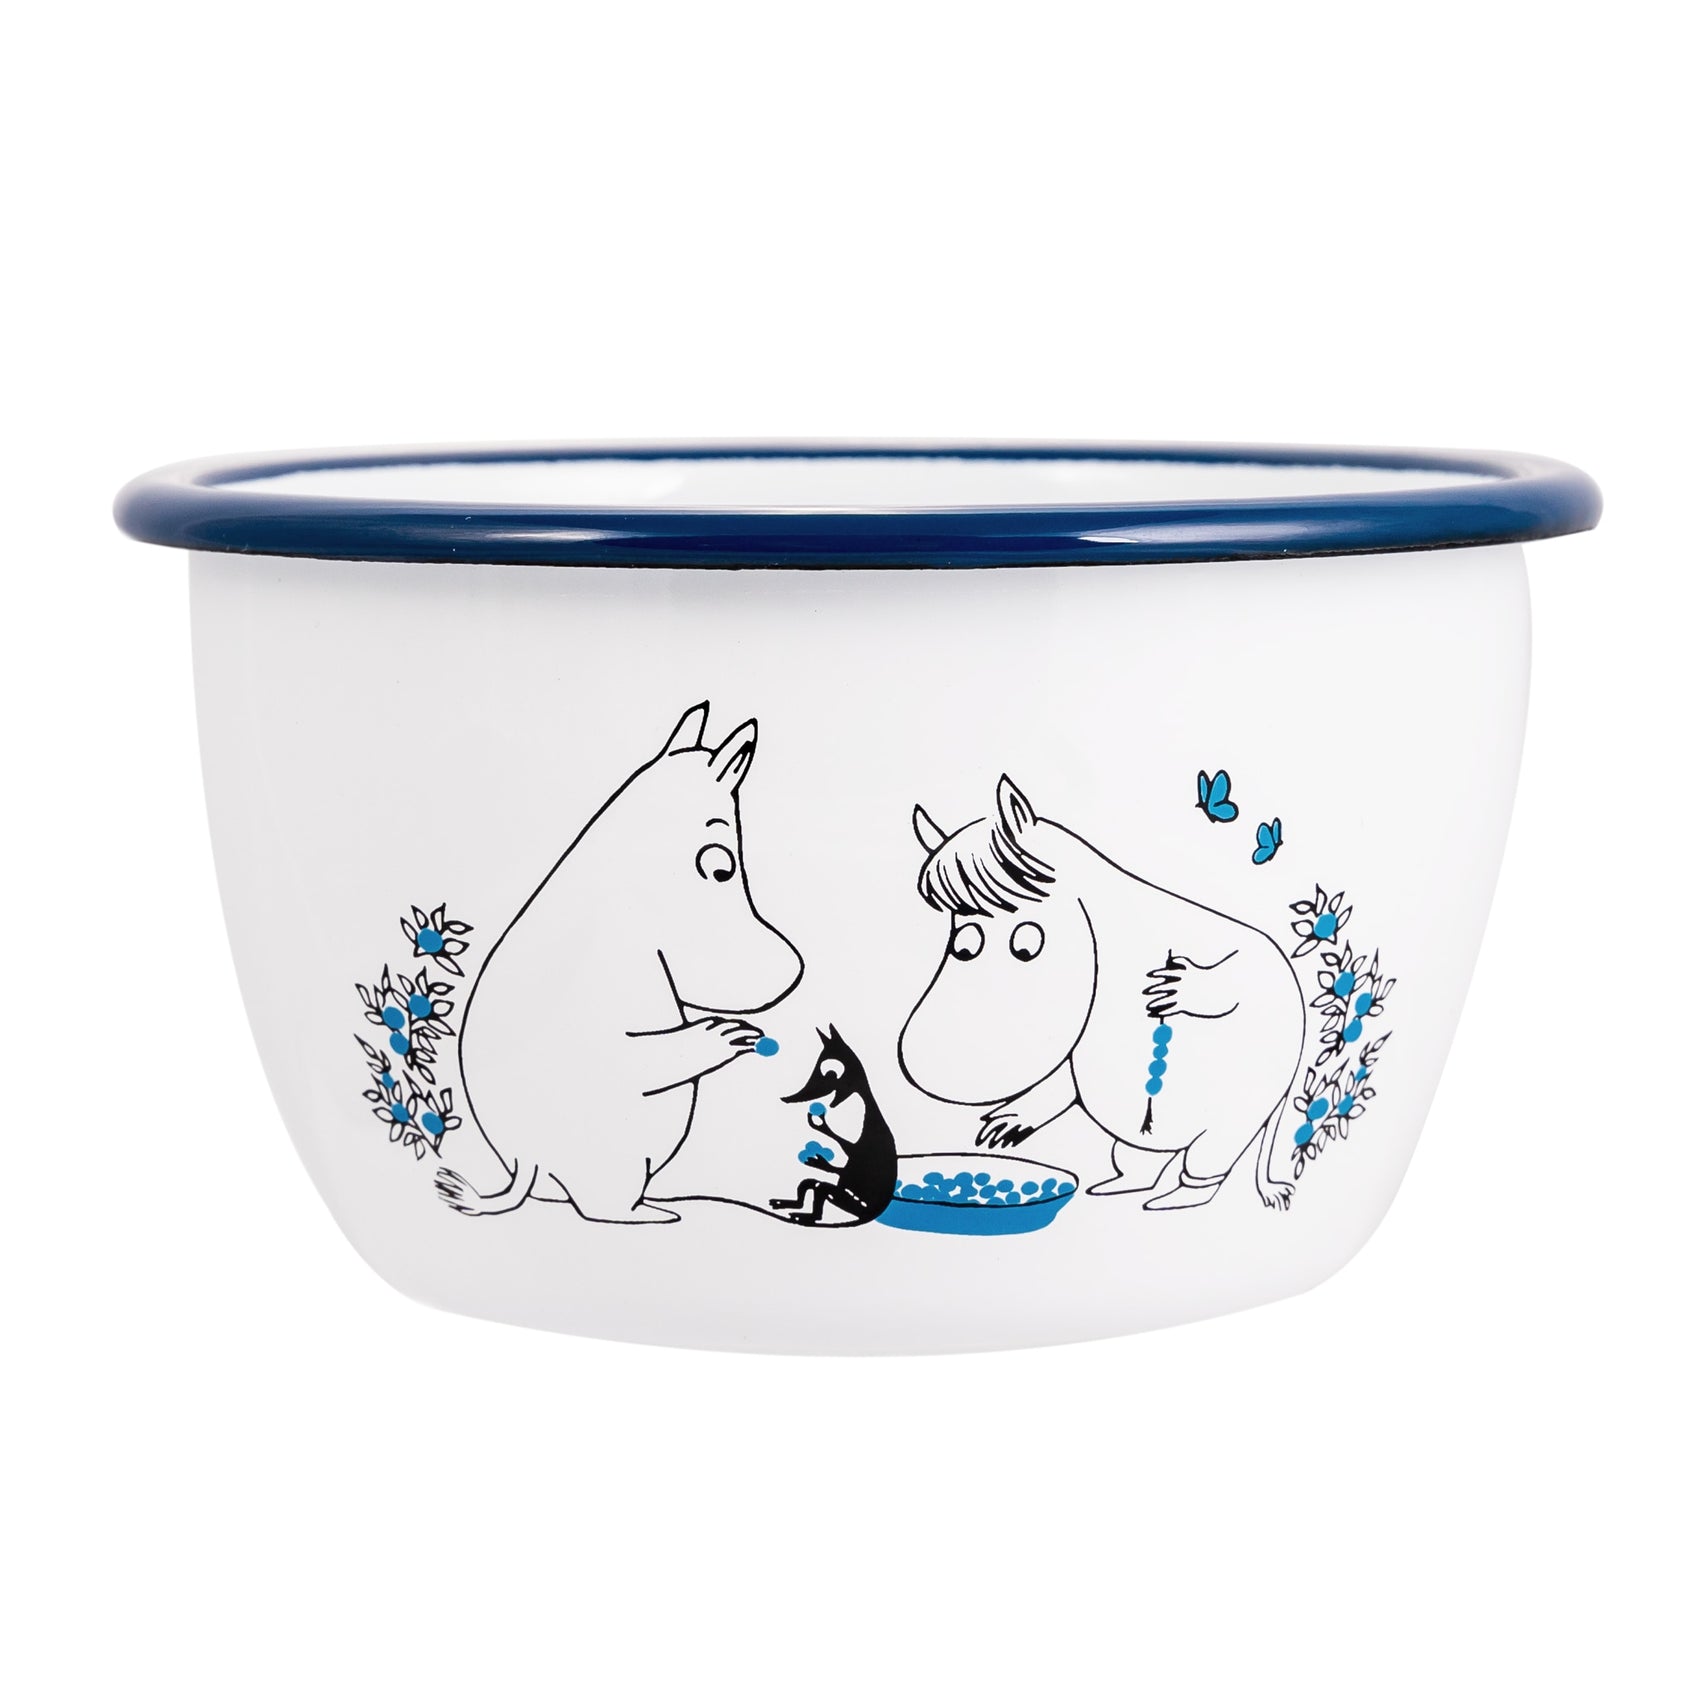 The Moomins enamel bowl 6dl Blueberry